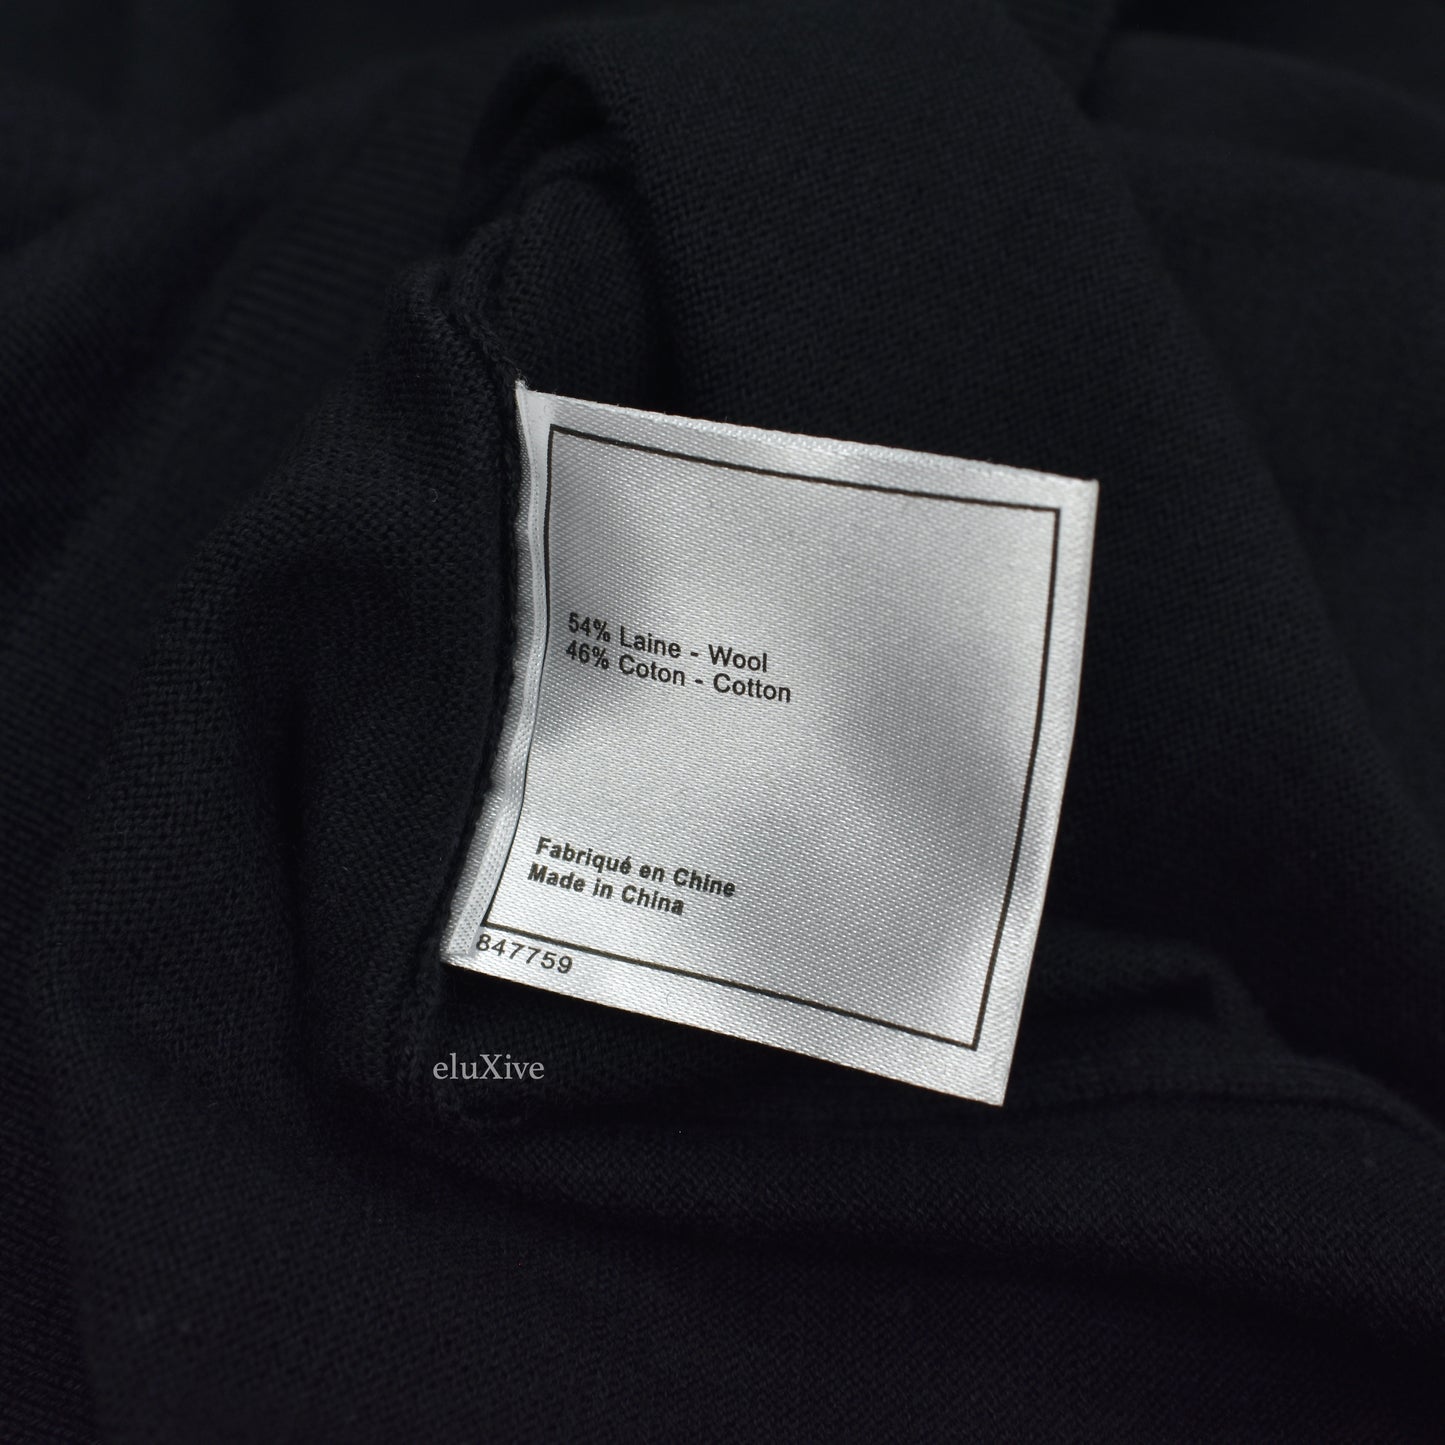 Chanel - Black Wool/Cotton Uniform Turtleneck Sweater